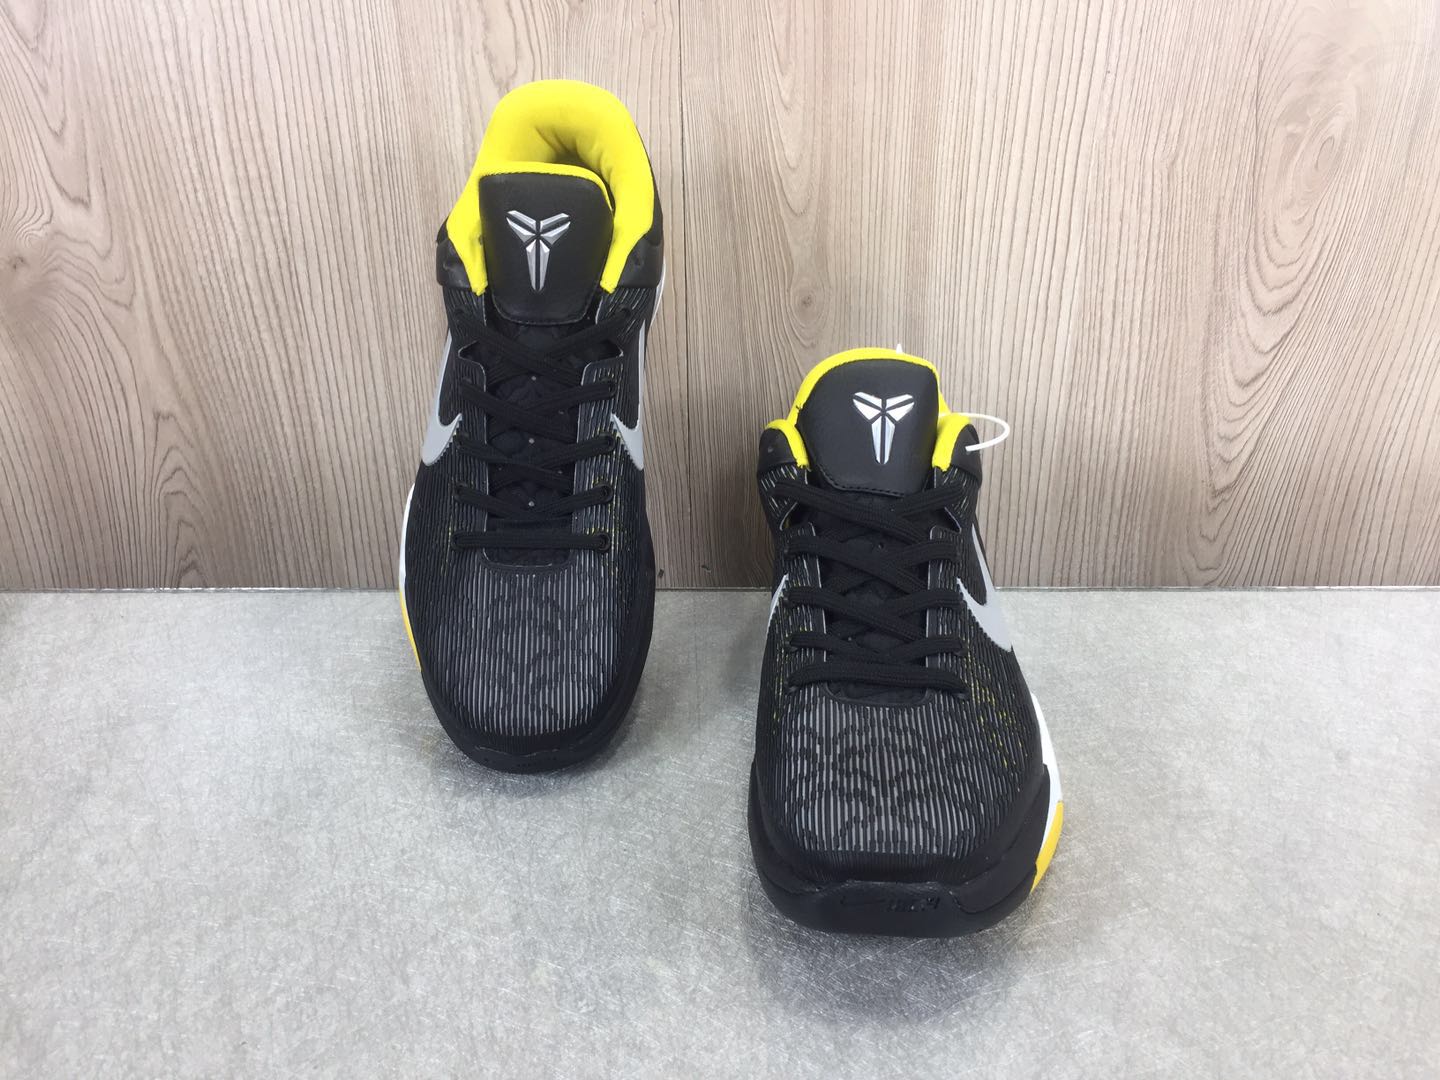 New Nike Kobe Bryant VII Black Yellow Shoes